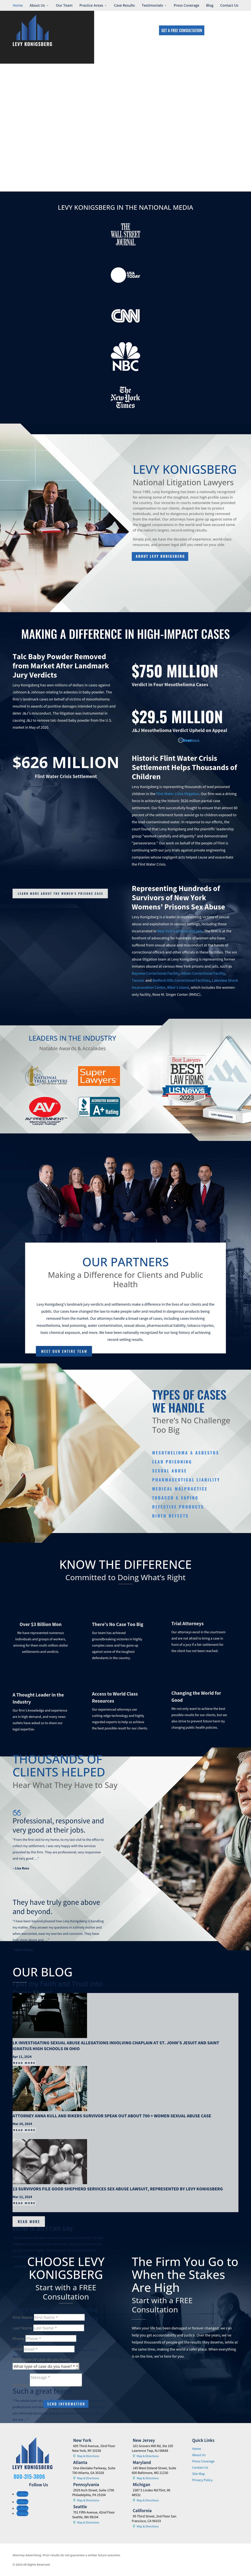 Levy Konigsberg LLP - White Plains NY Lawyers